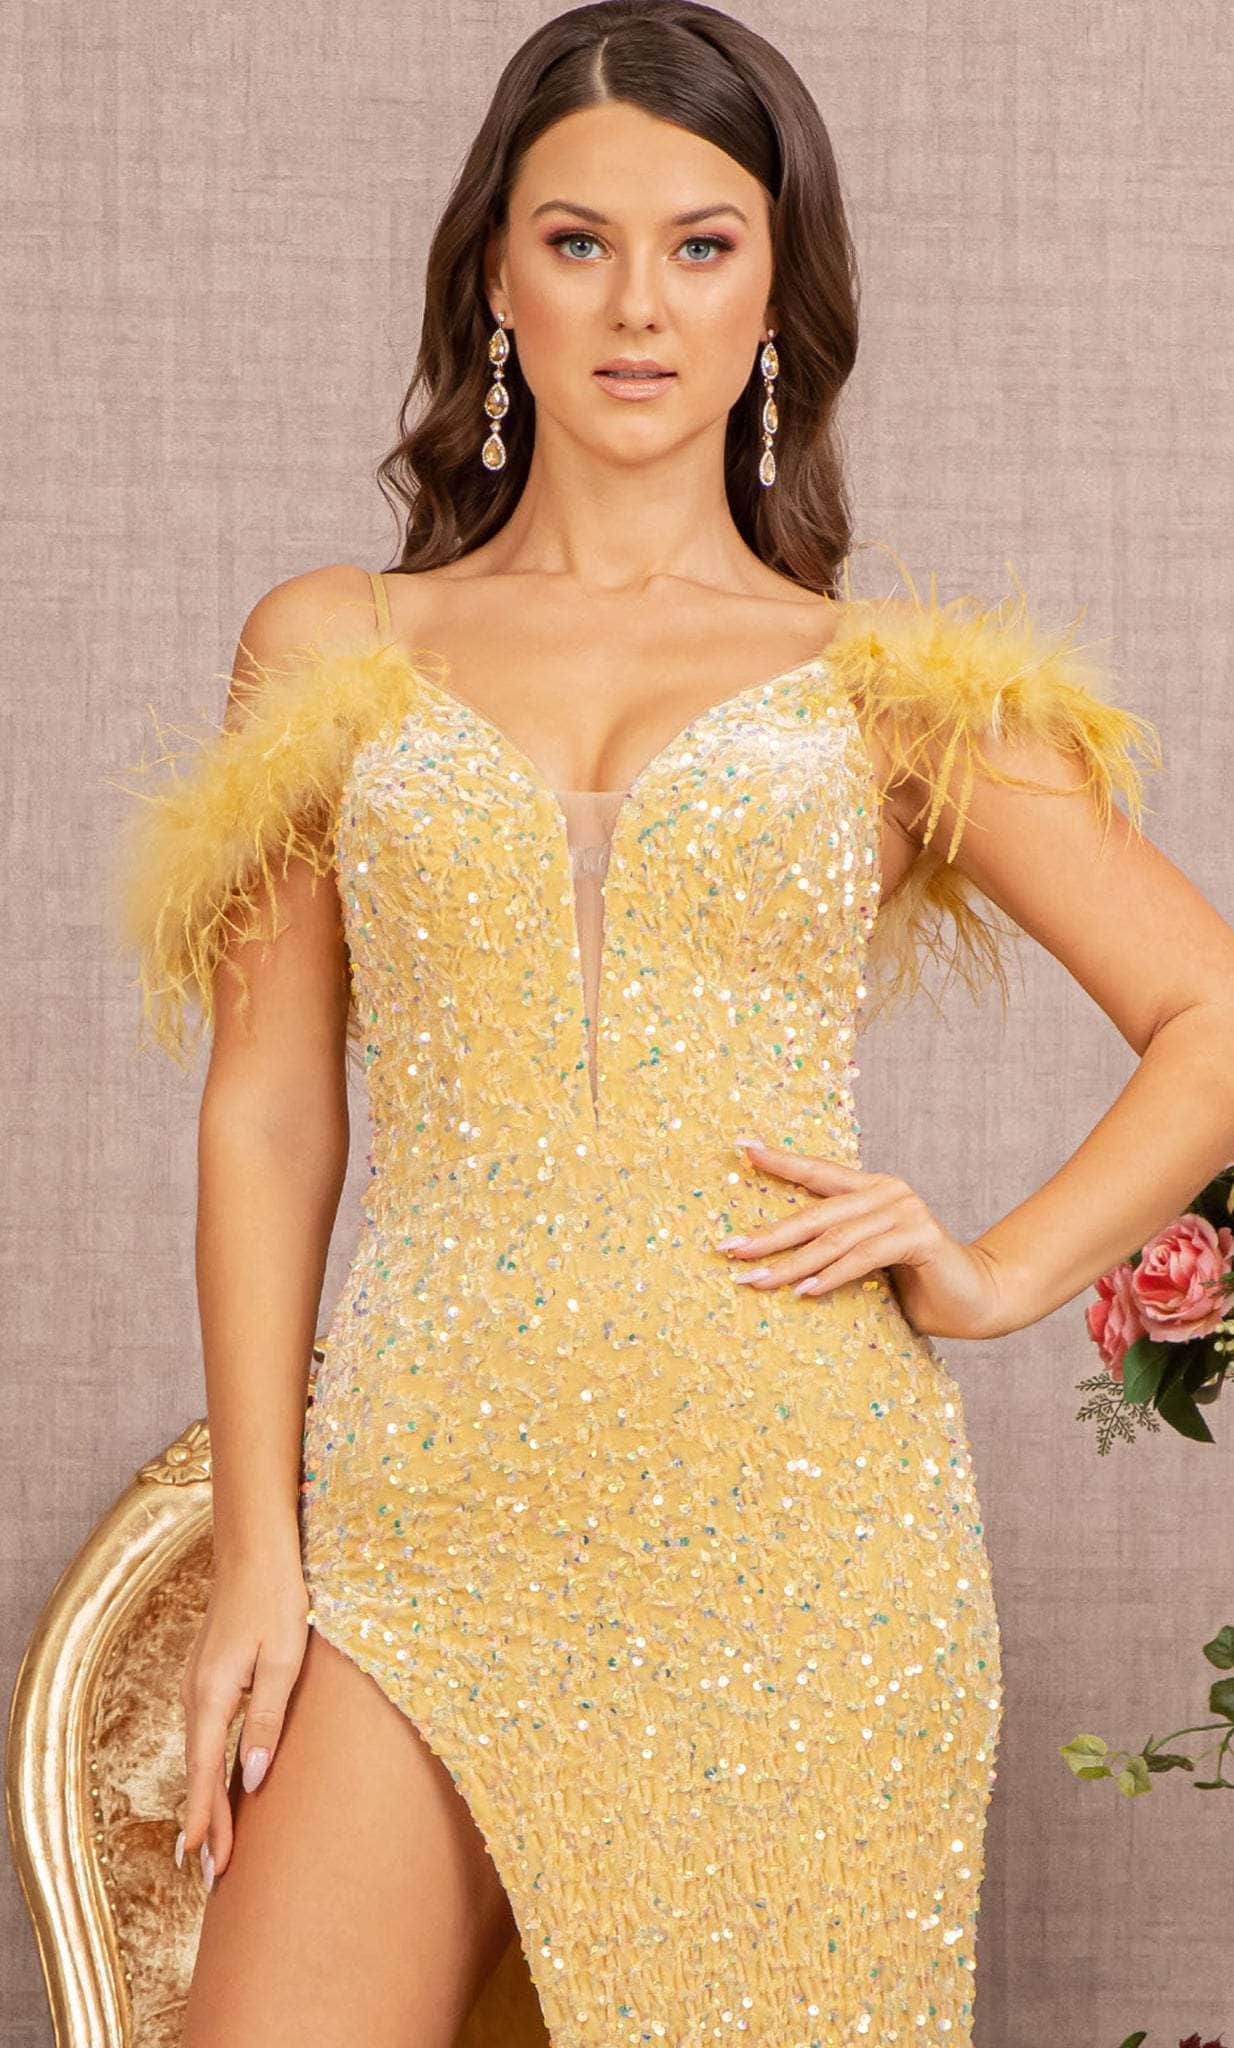 Elizabeth K GL3149 - Feather Ornate Sequin Prom Dress Special Occasion Dress